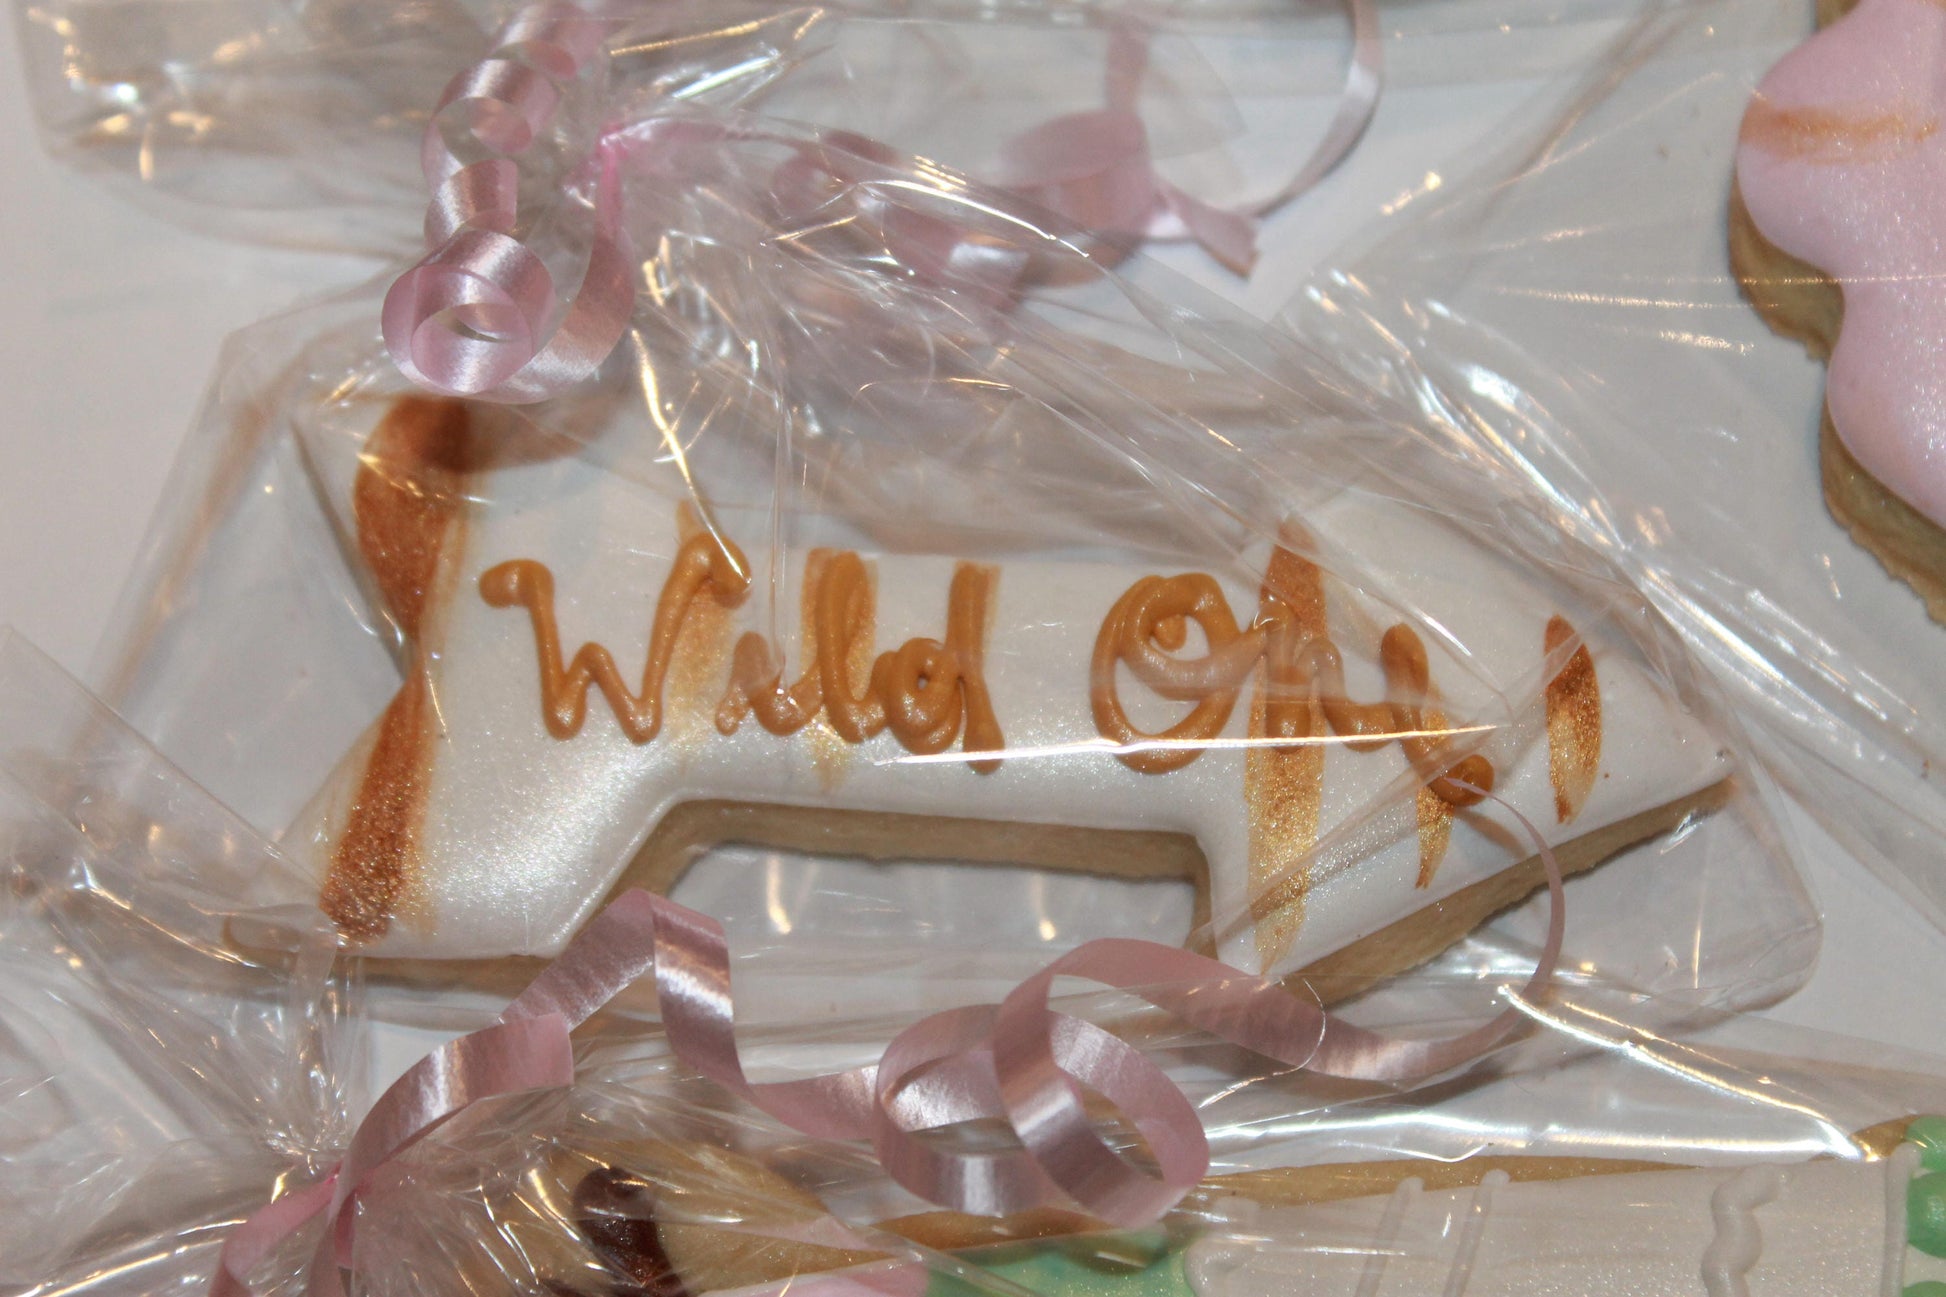 Wild One cookies One Dozen (12) - Ladybug bake shop